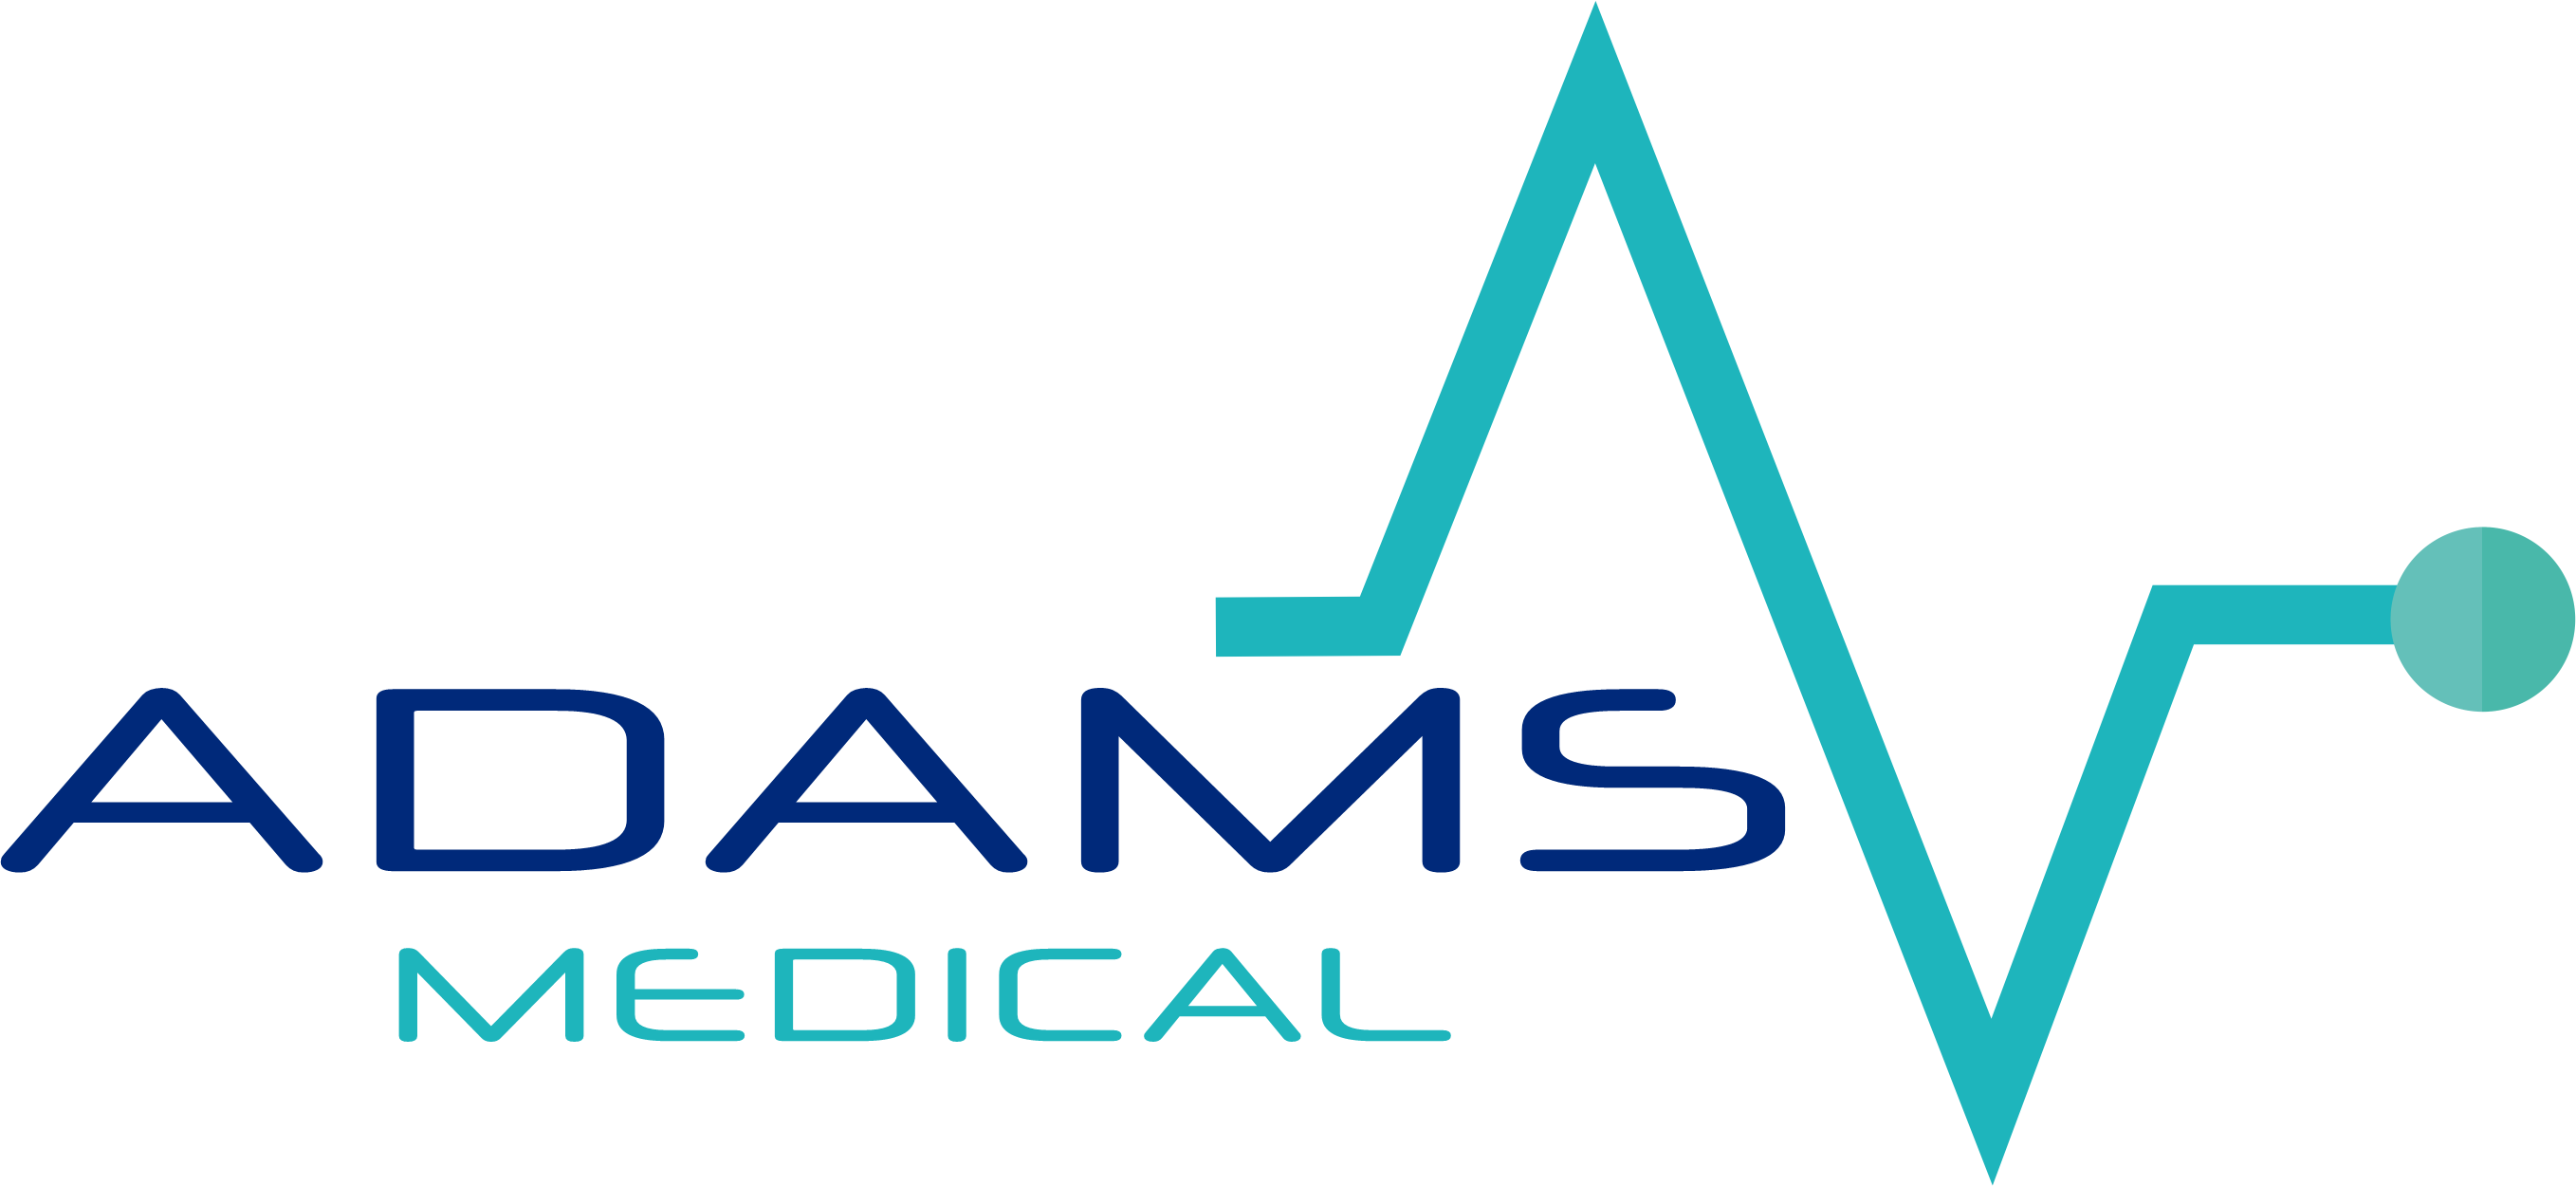 Adams Medical